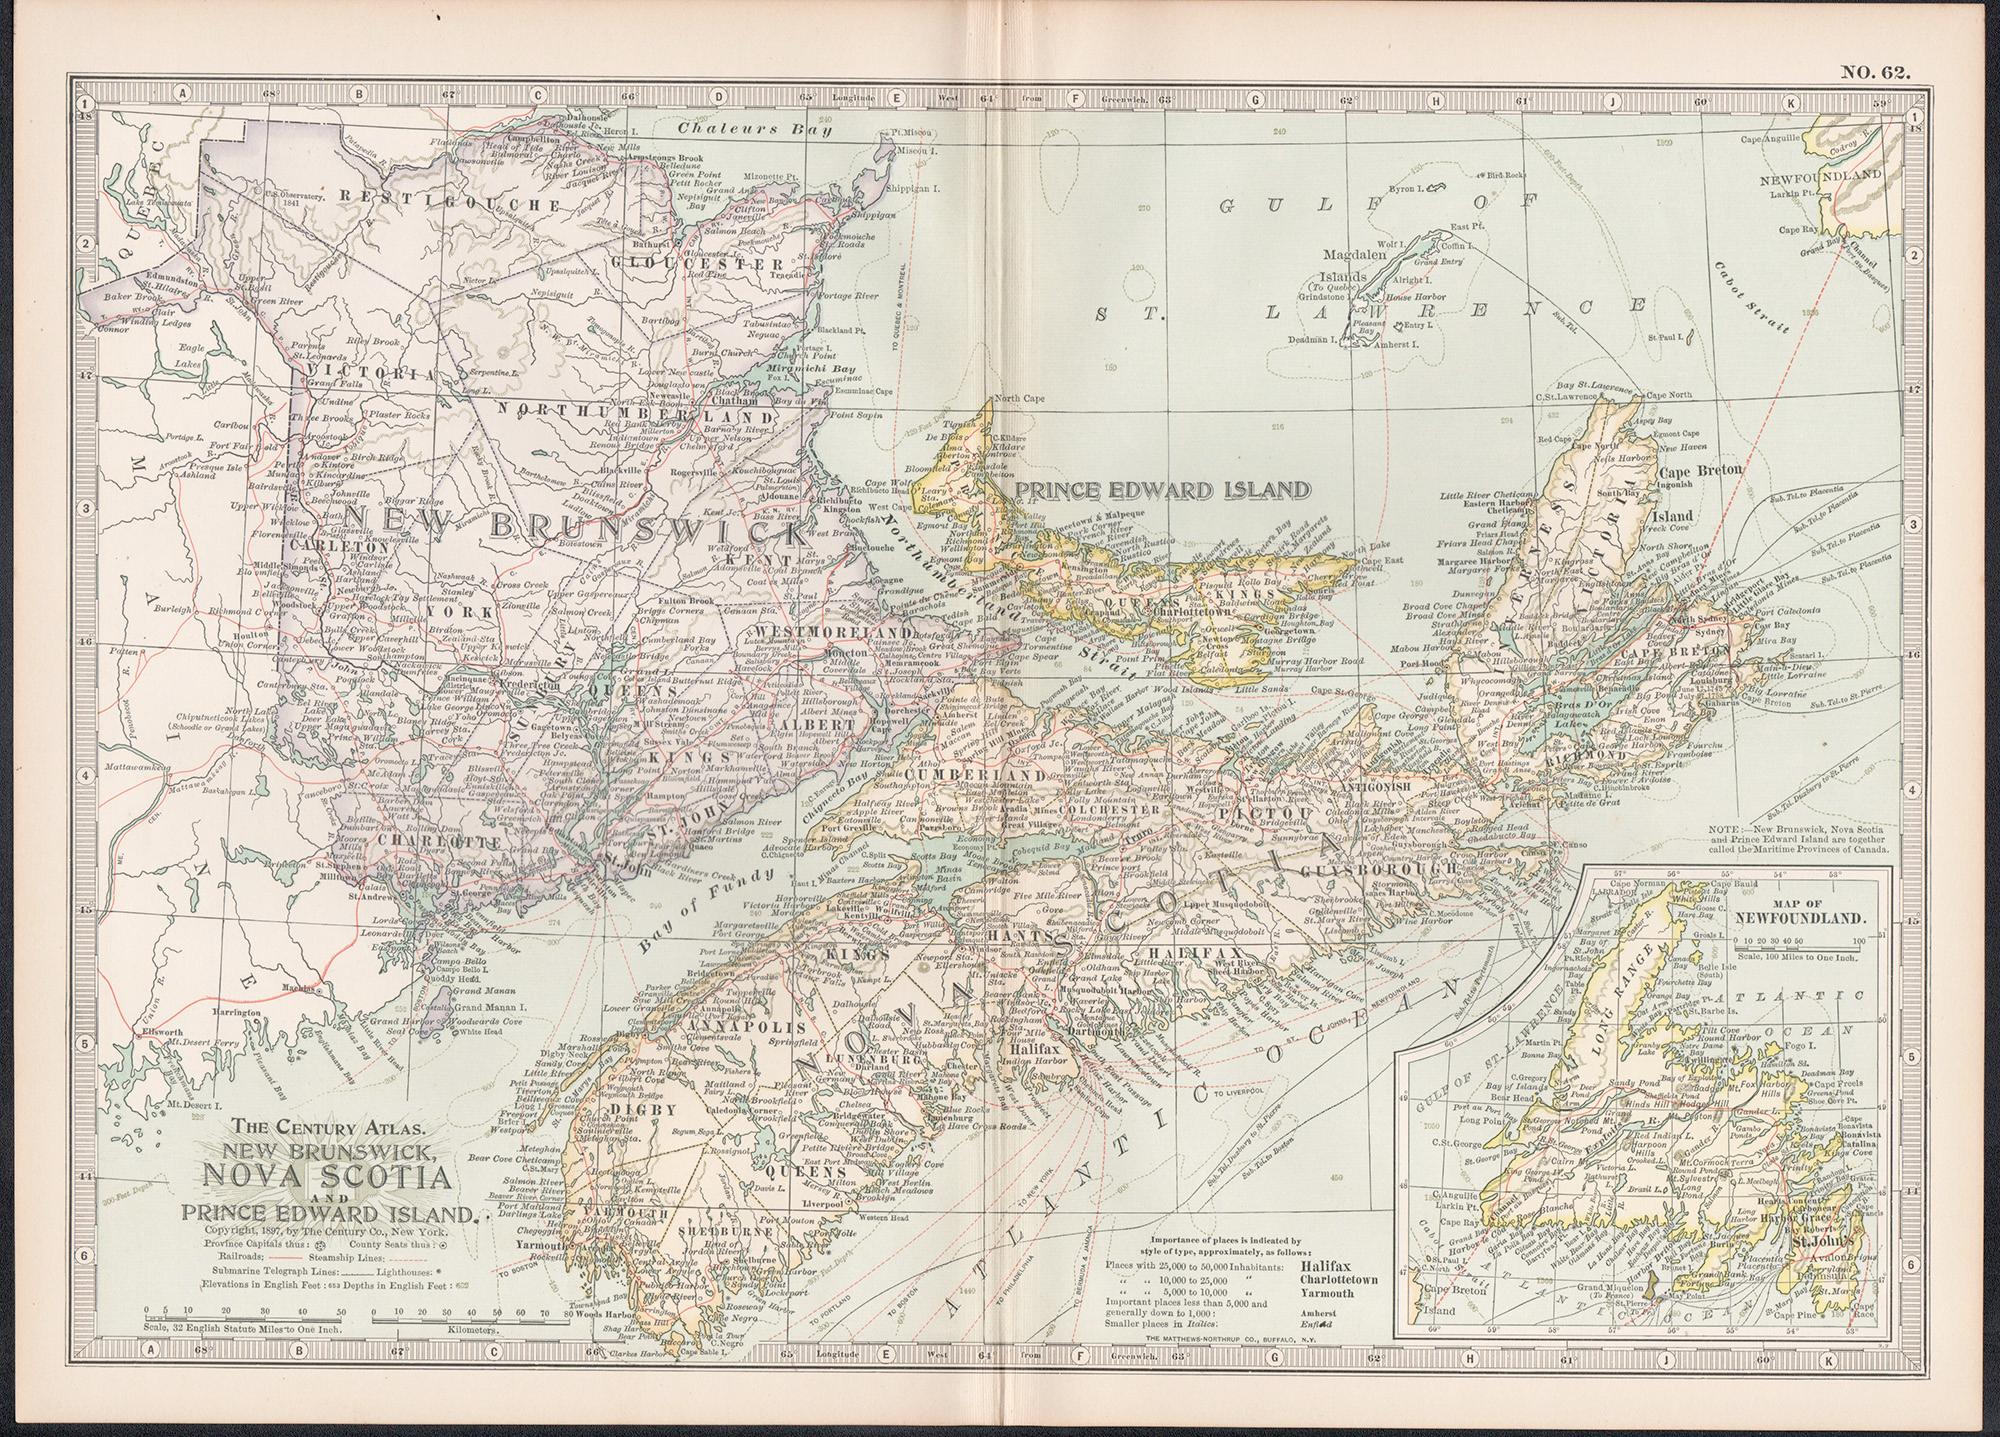 New Brunswick, Nova Scotia and Prince Edward Island, Canada. Century Atlas map - Print by Unknown